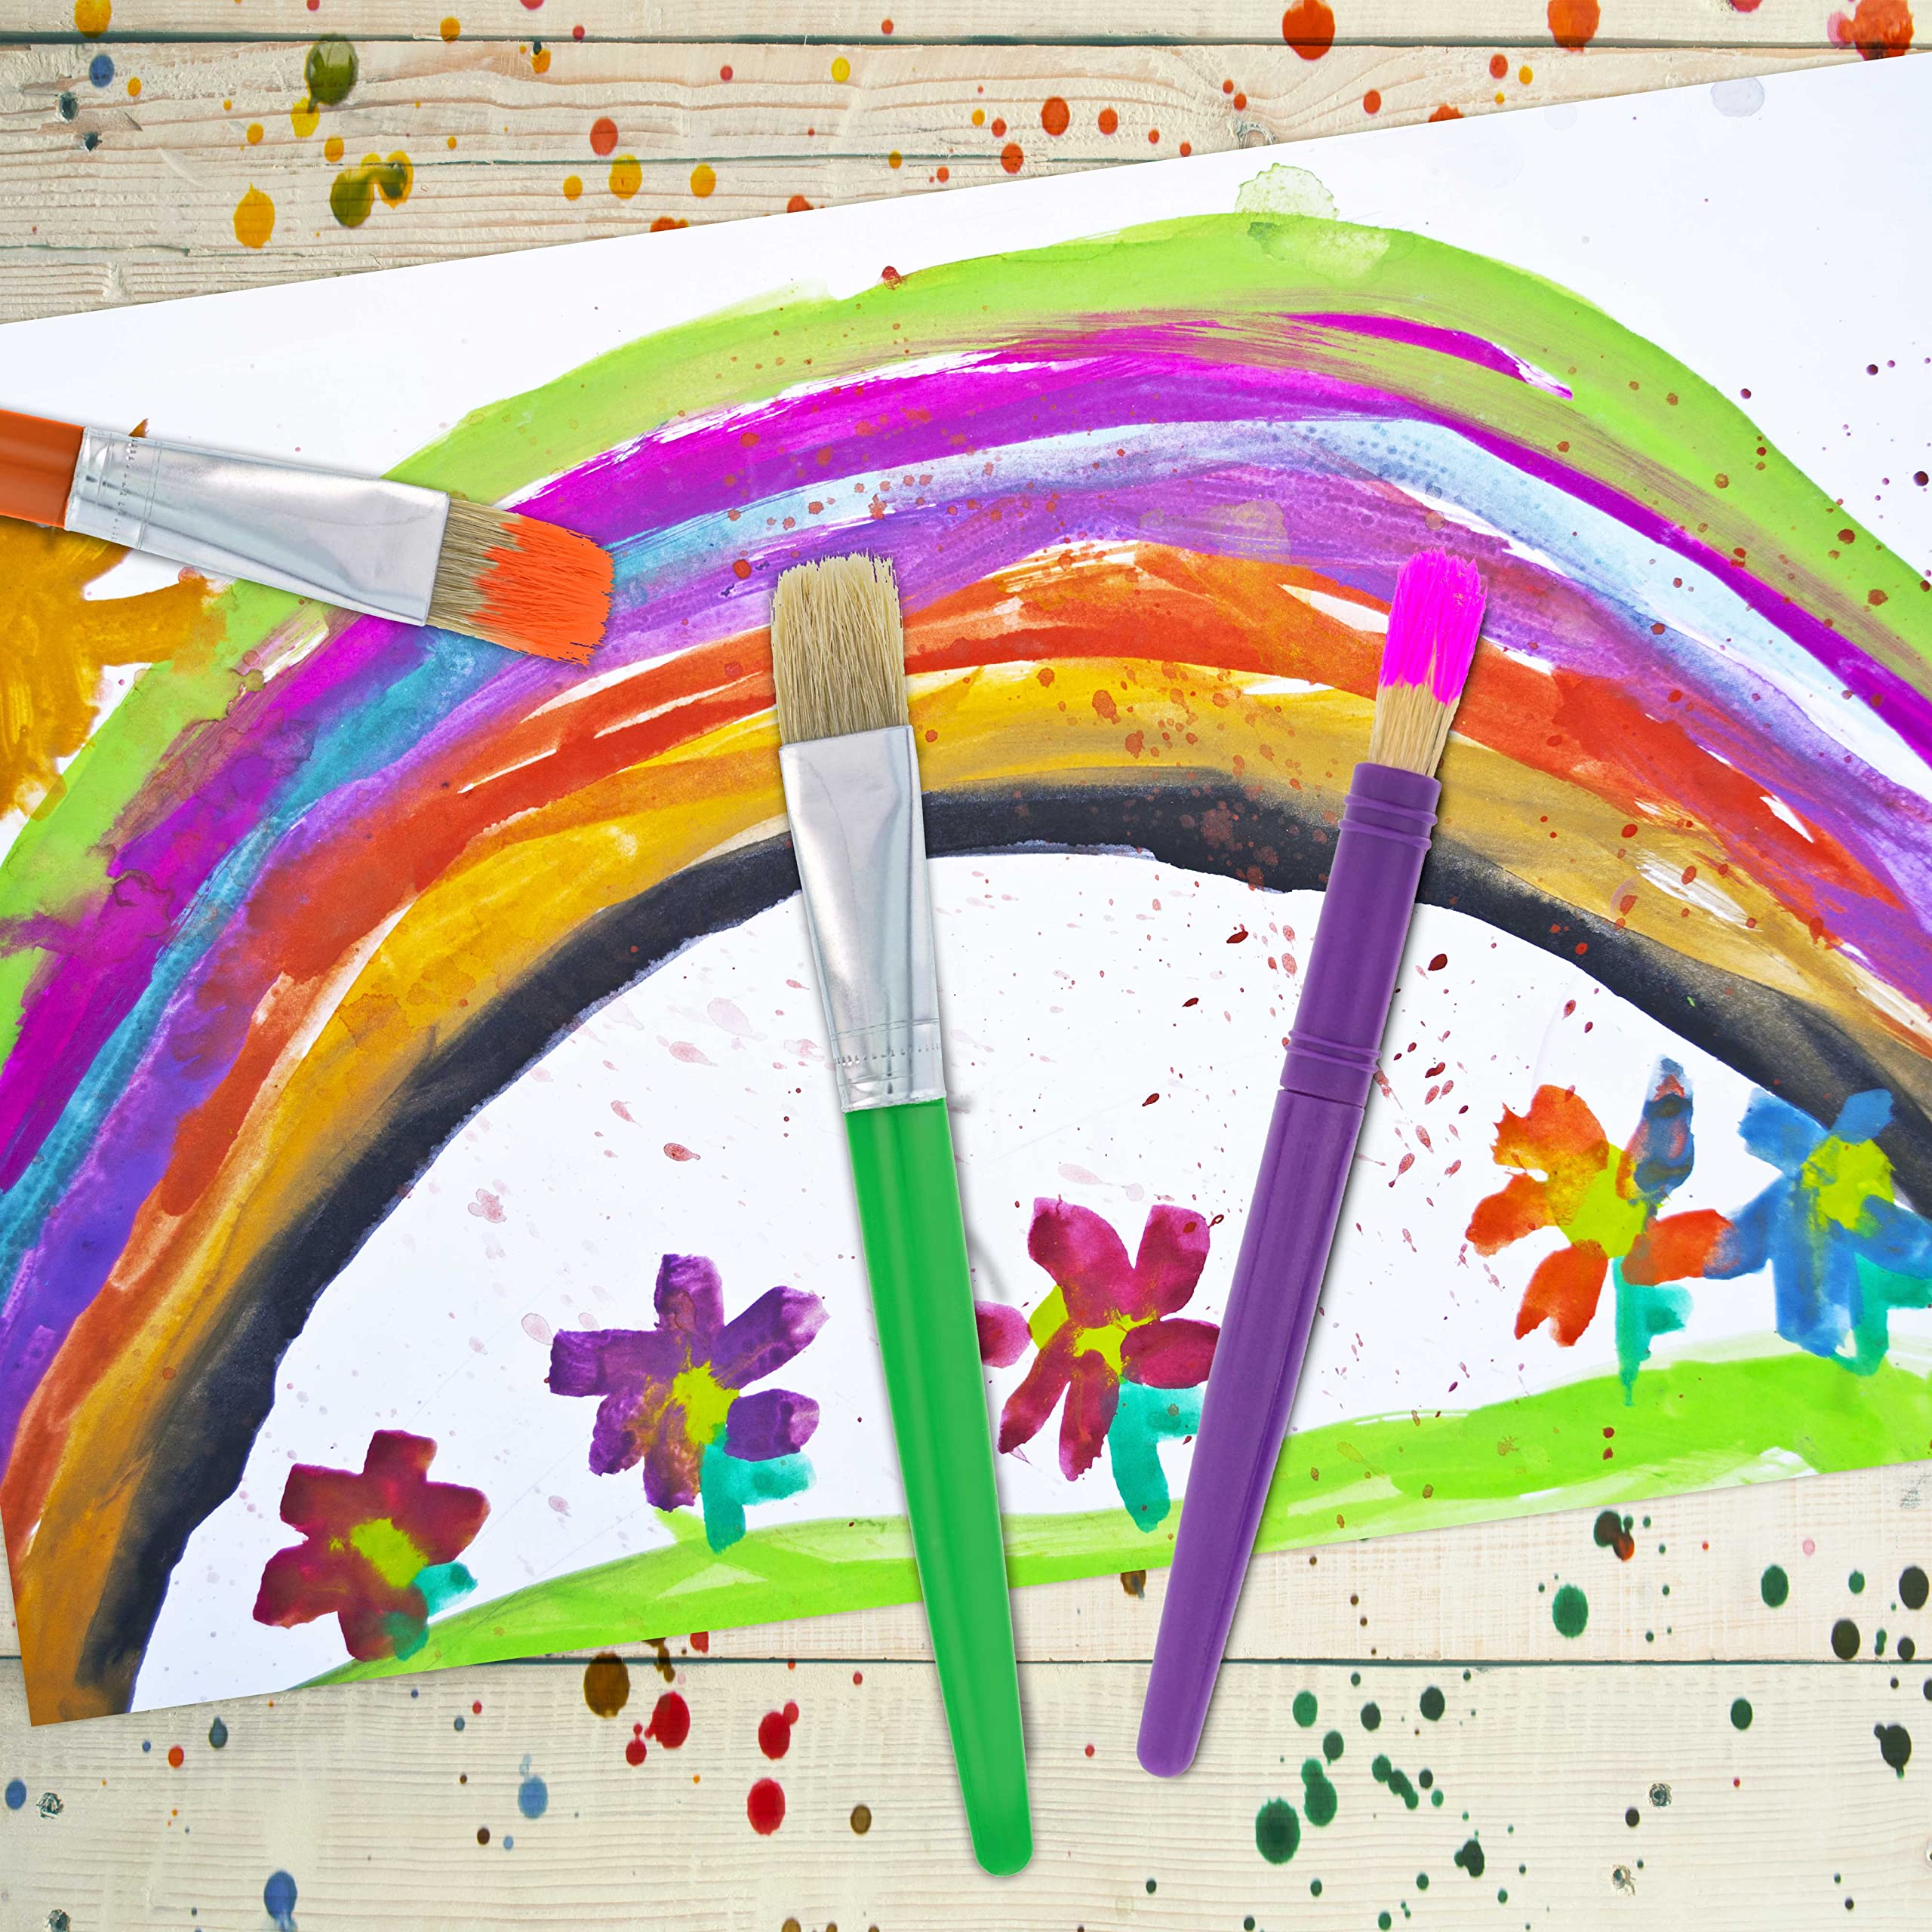 U.S. Art Supply 20-Piece Large Round and Flat Children's Hog Bristle Tempera Paint Brush Set - Fun Kid's Party, School, Student, Class Craft Painting - Beginners Starter Artist Painting Brush Kit